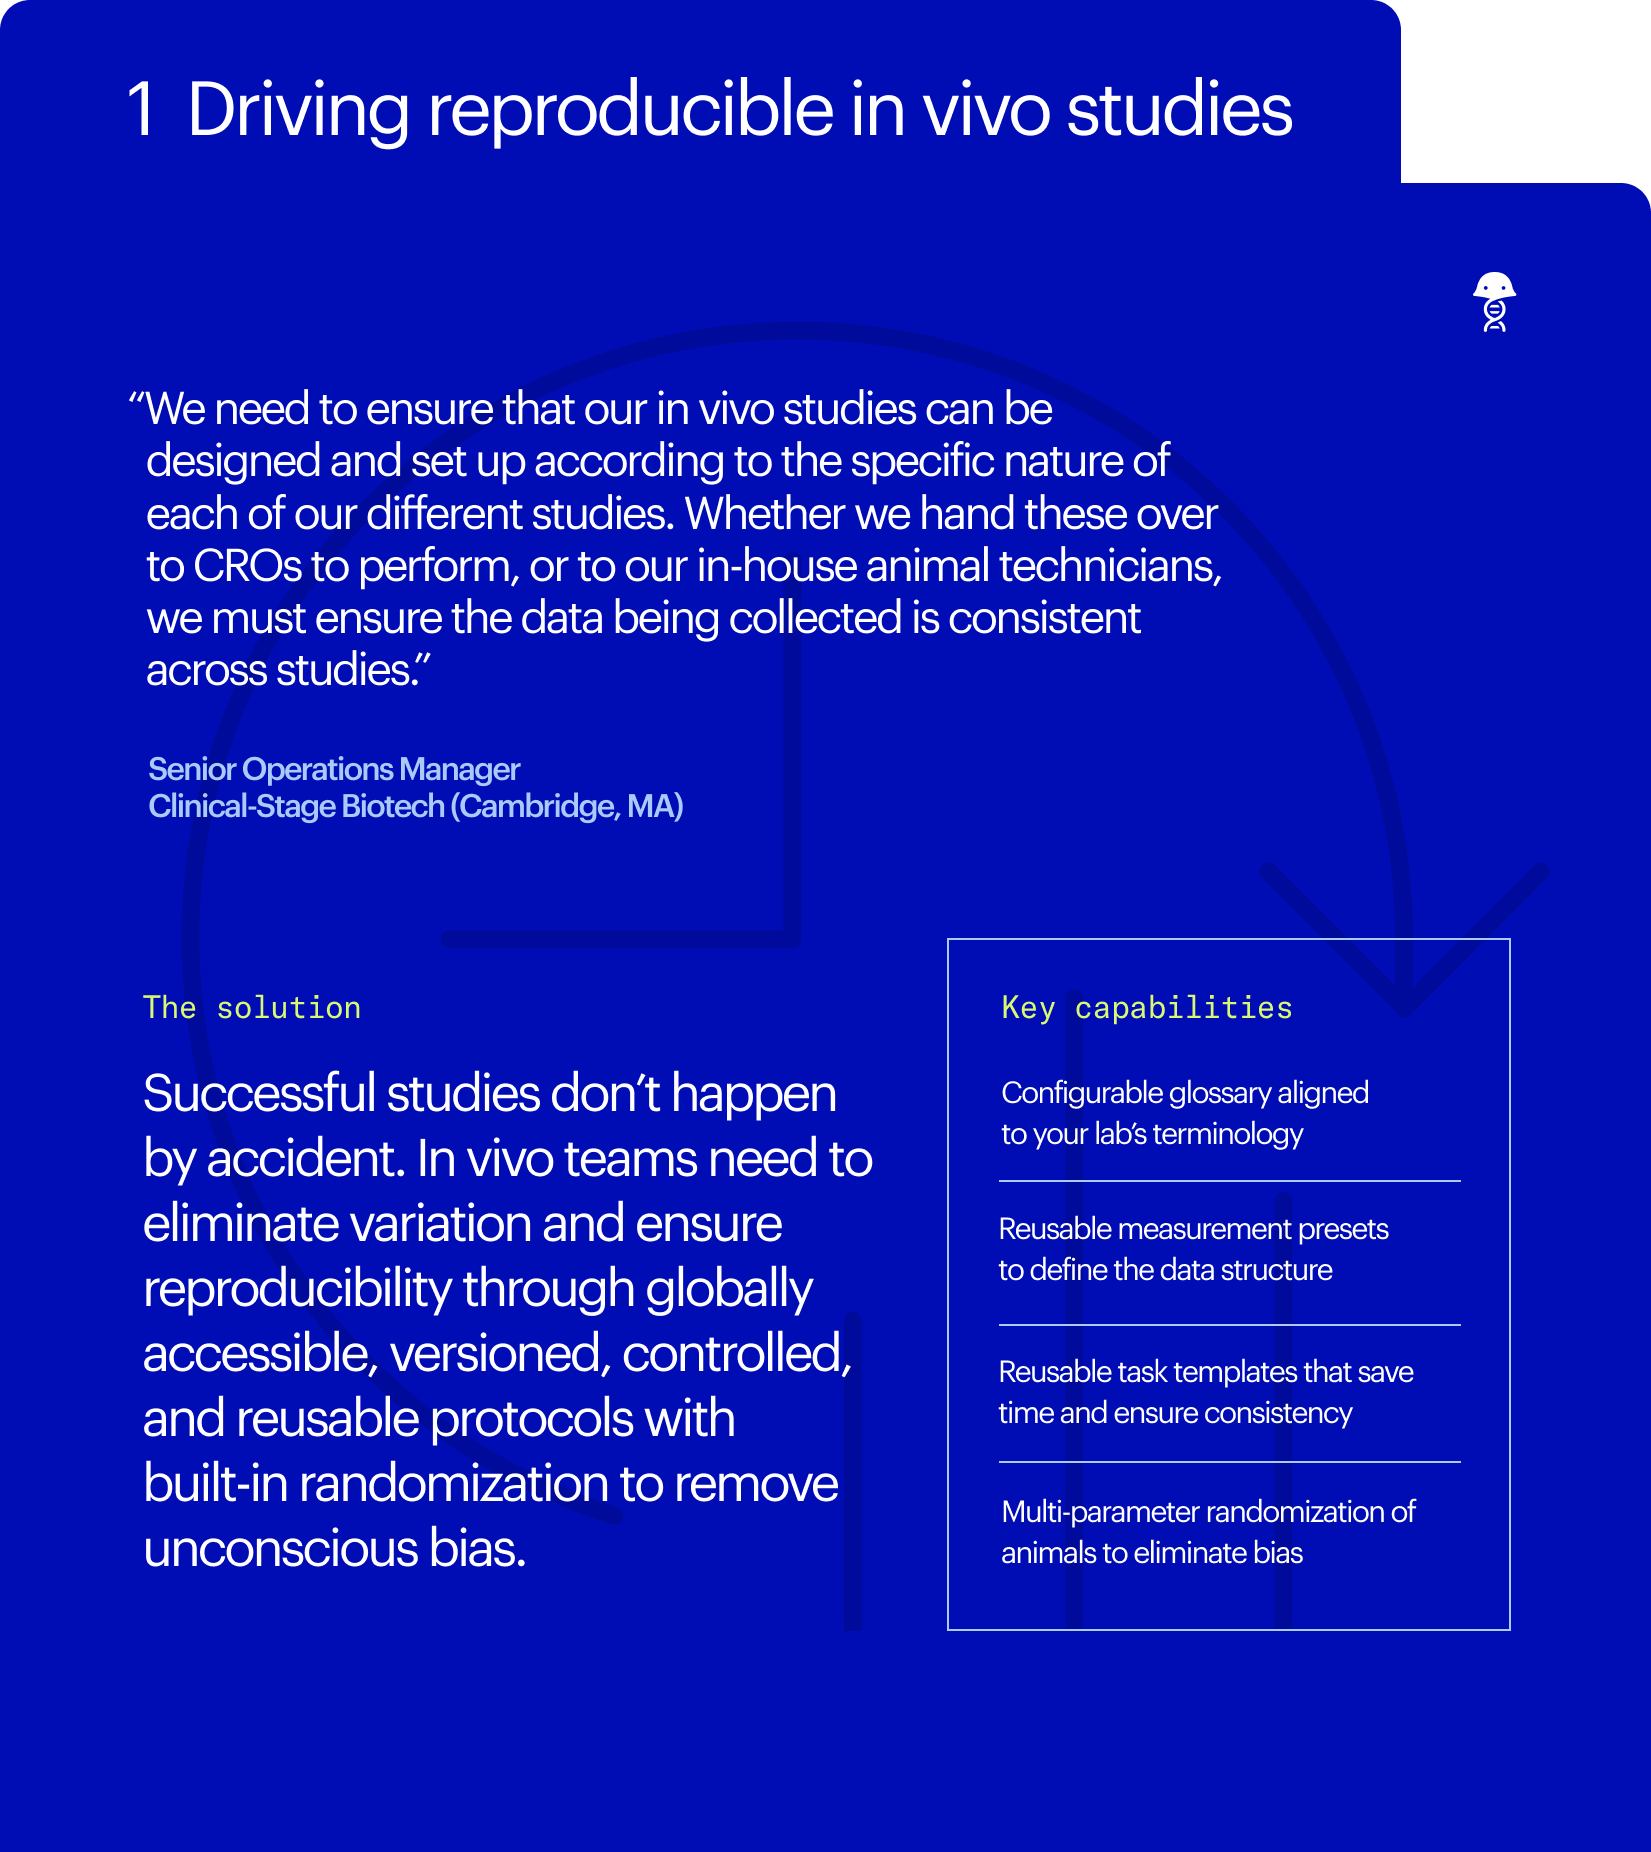 studies-infographic-1-driving-reproducible-in-vivo-studies